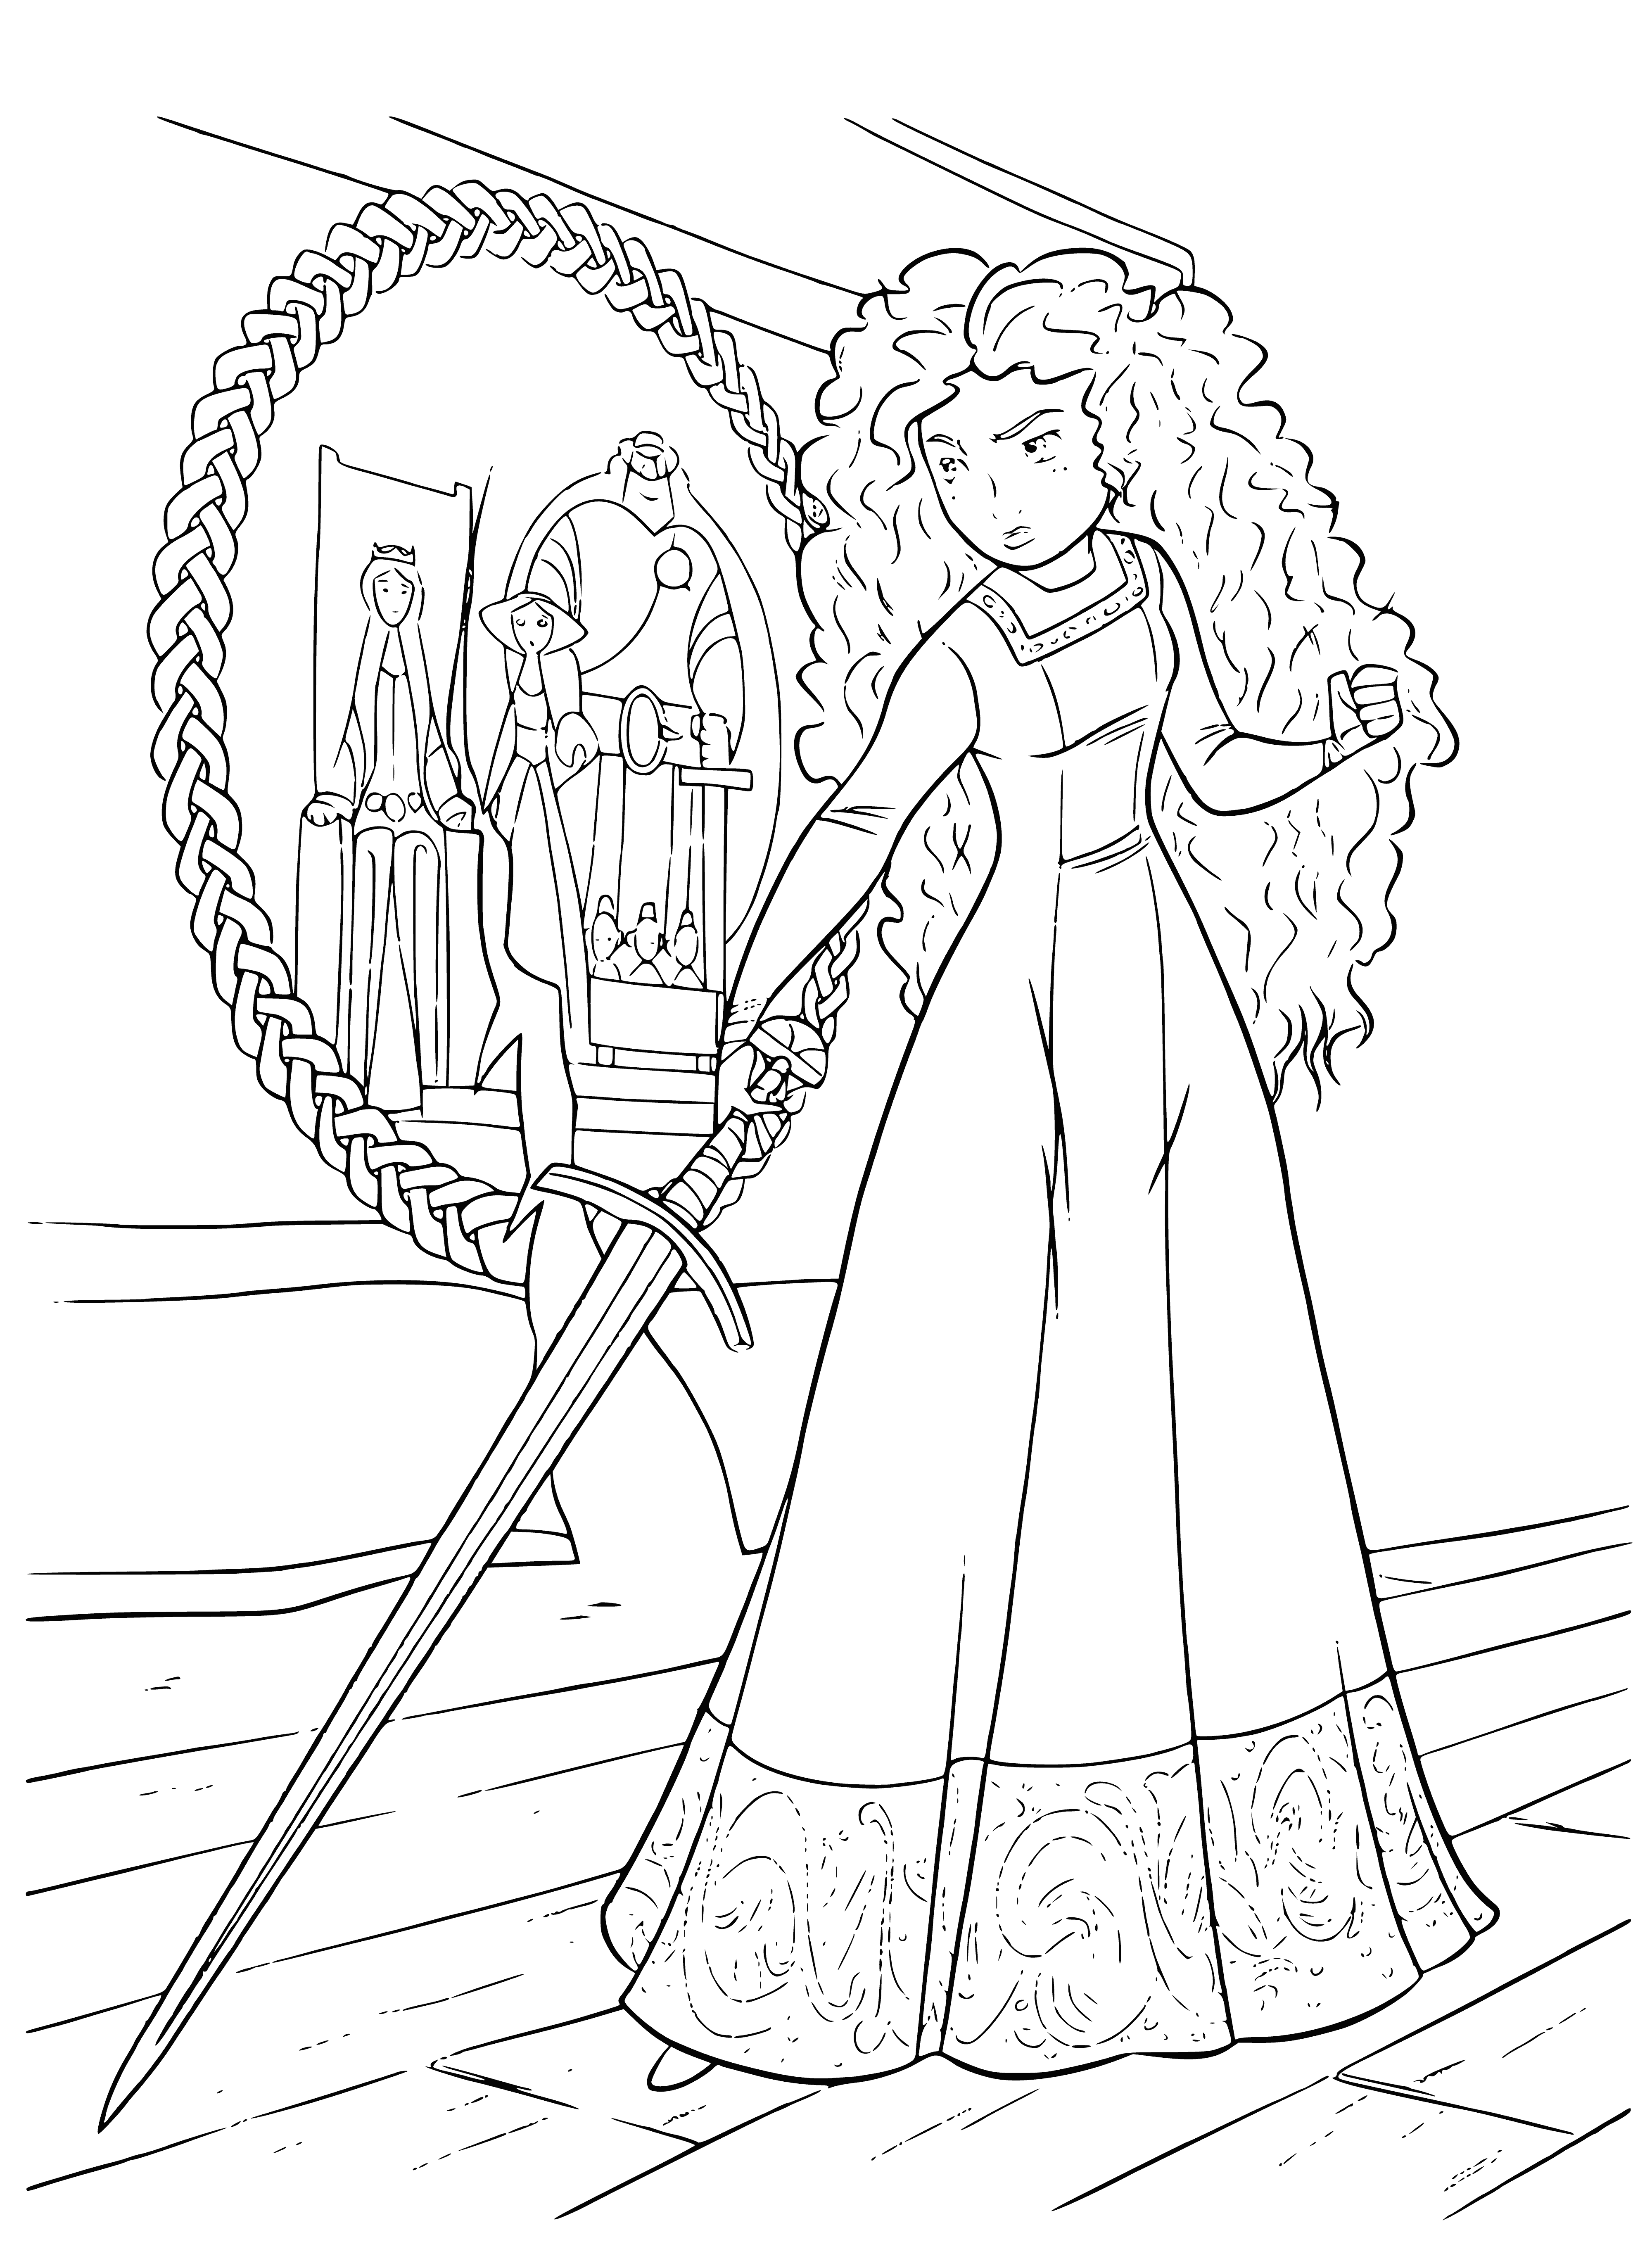 Princess Merida with sword coloring page